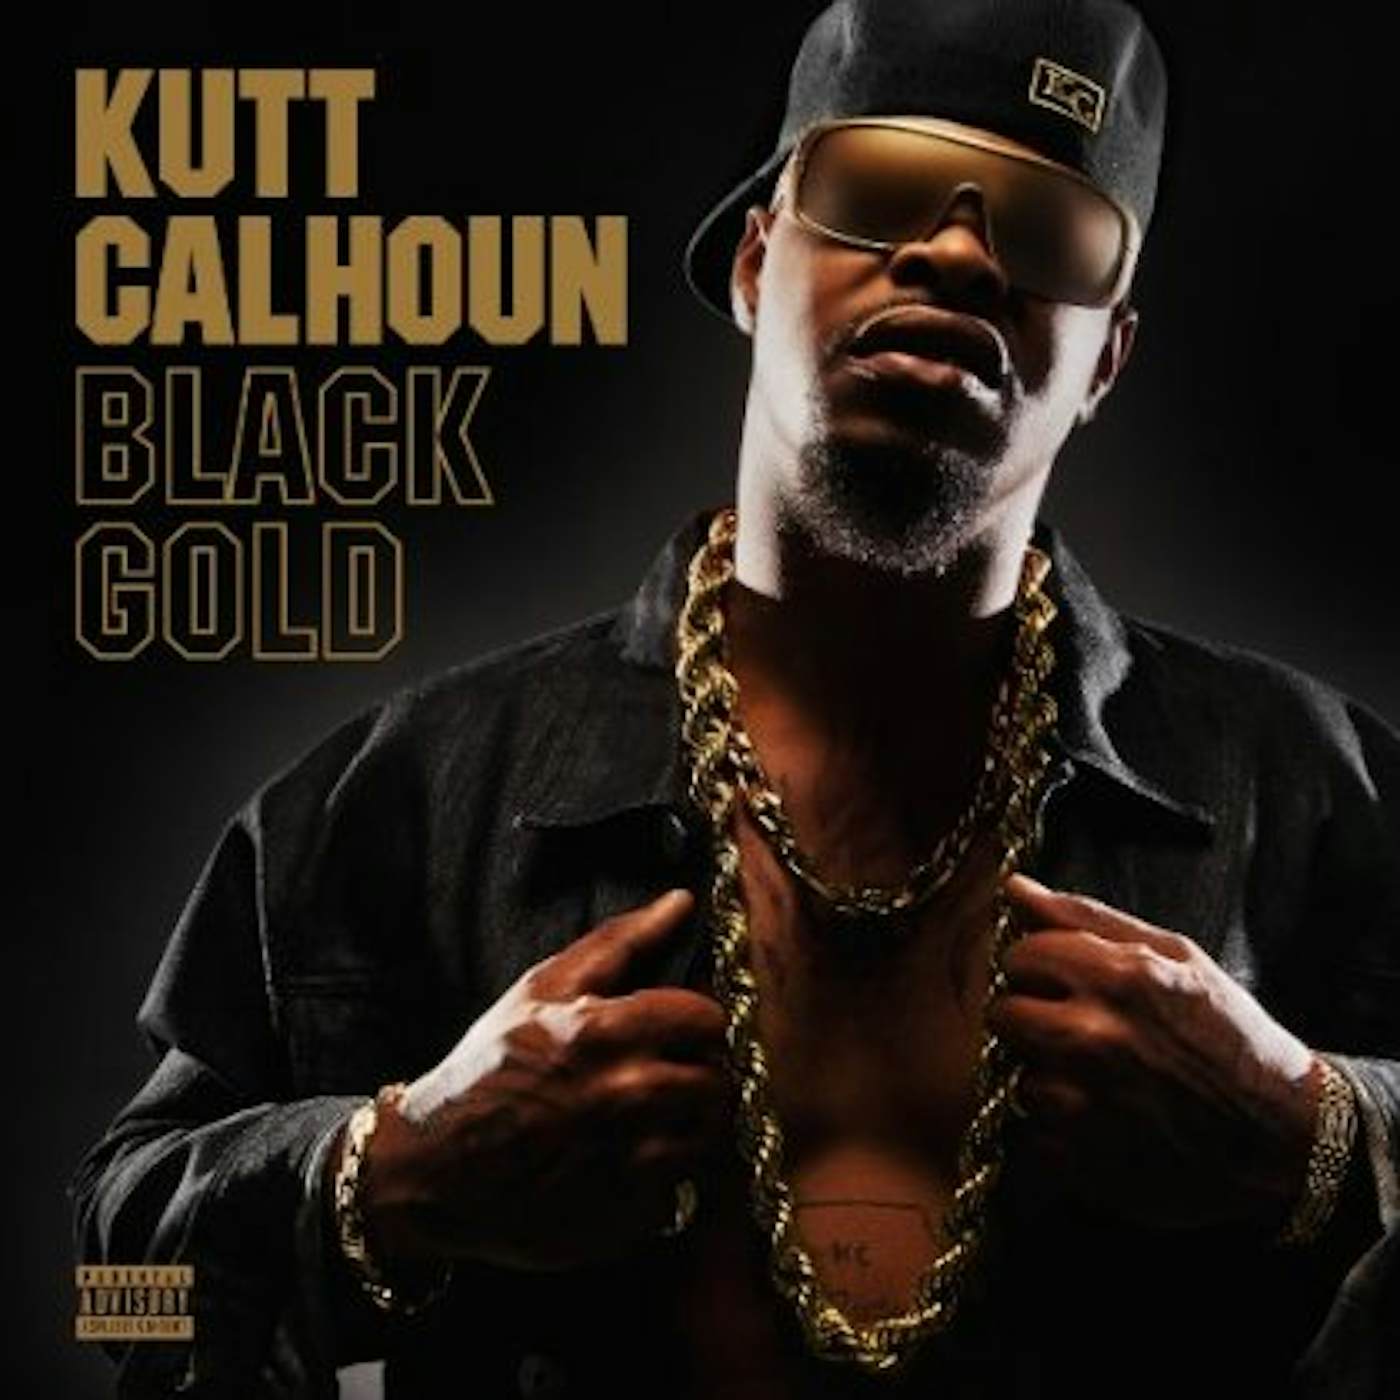 Kutt Calhoun BLACK GOLD CD